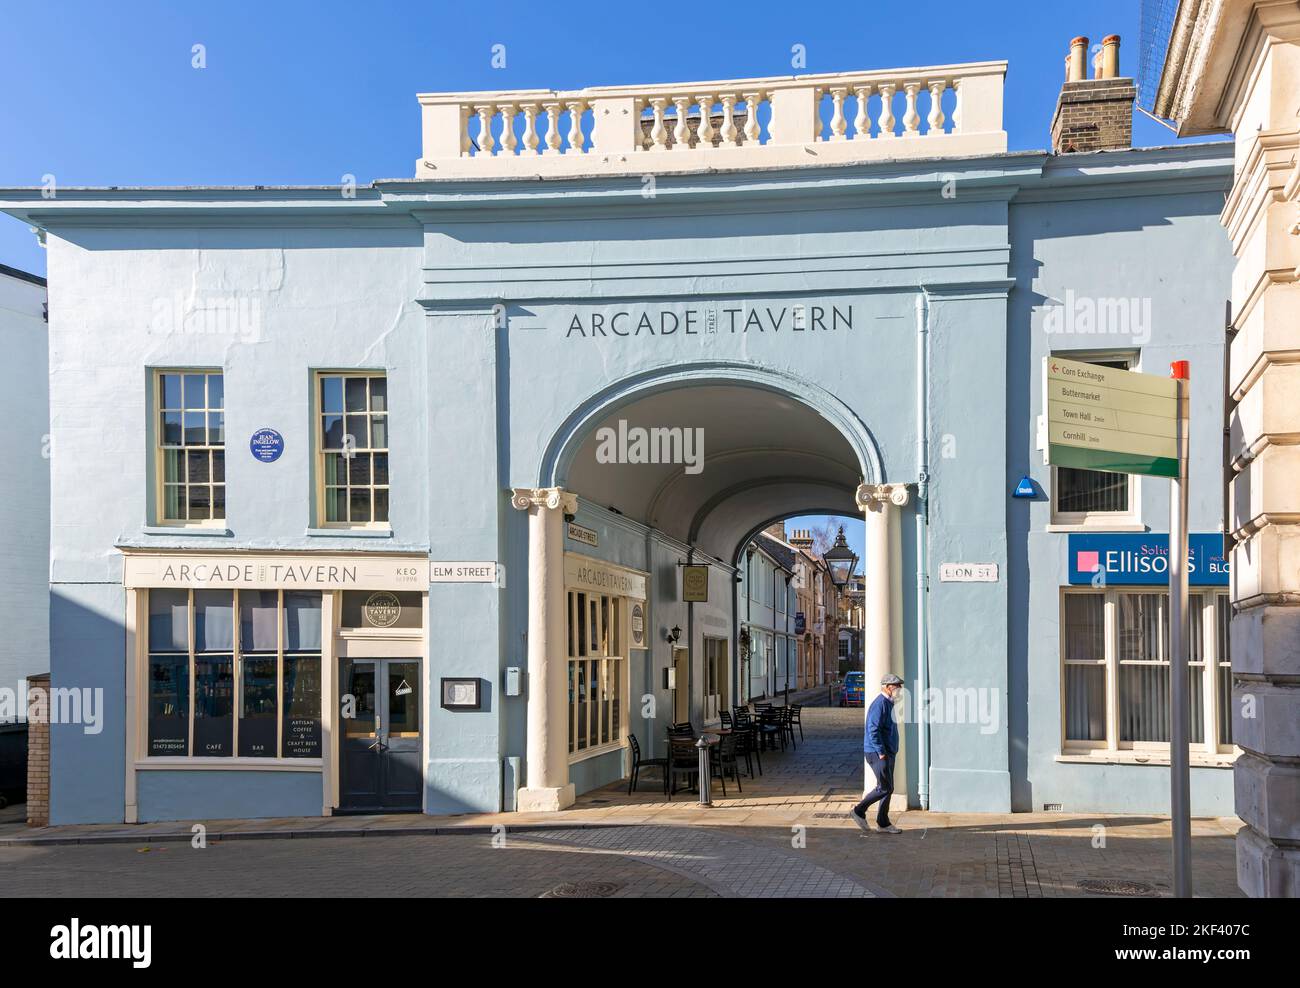 Archway into Arcade Street, sign for Arcade Tavern pub, Ipswich, Suffolk, England, UK Stock Photo